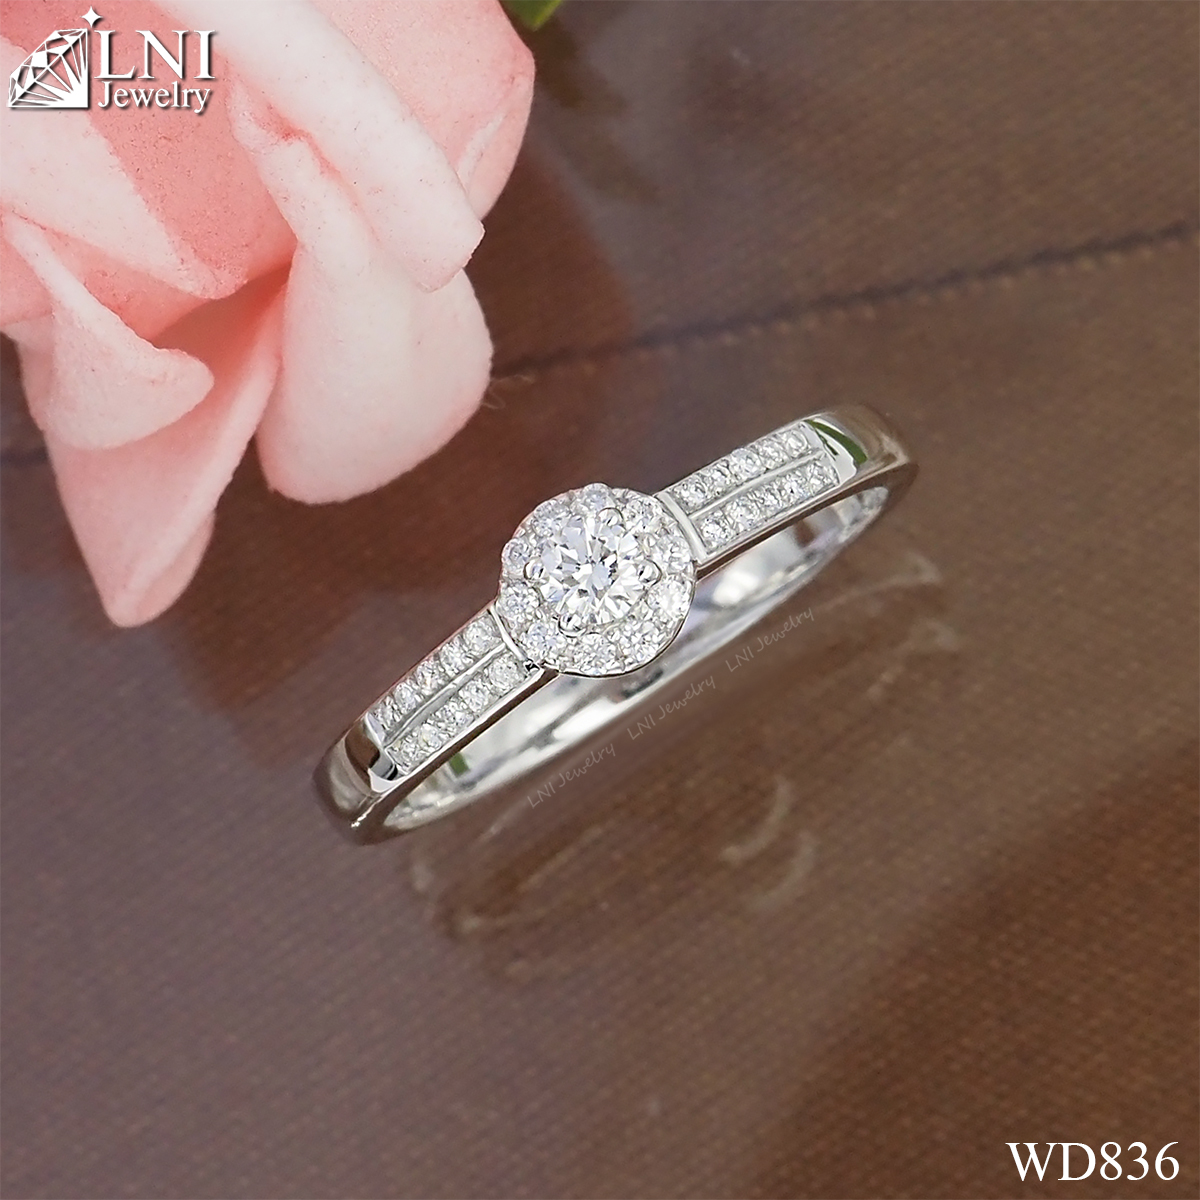 WD836 Halo Diamond Ring